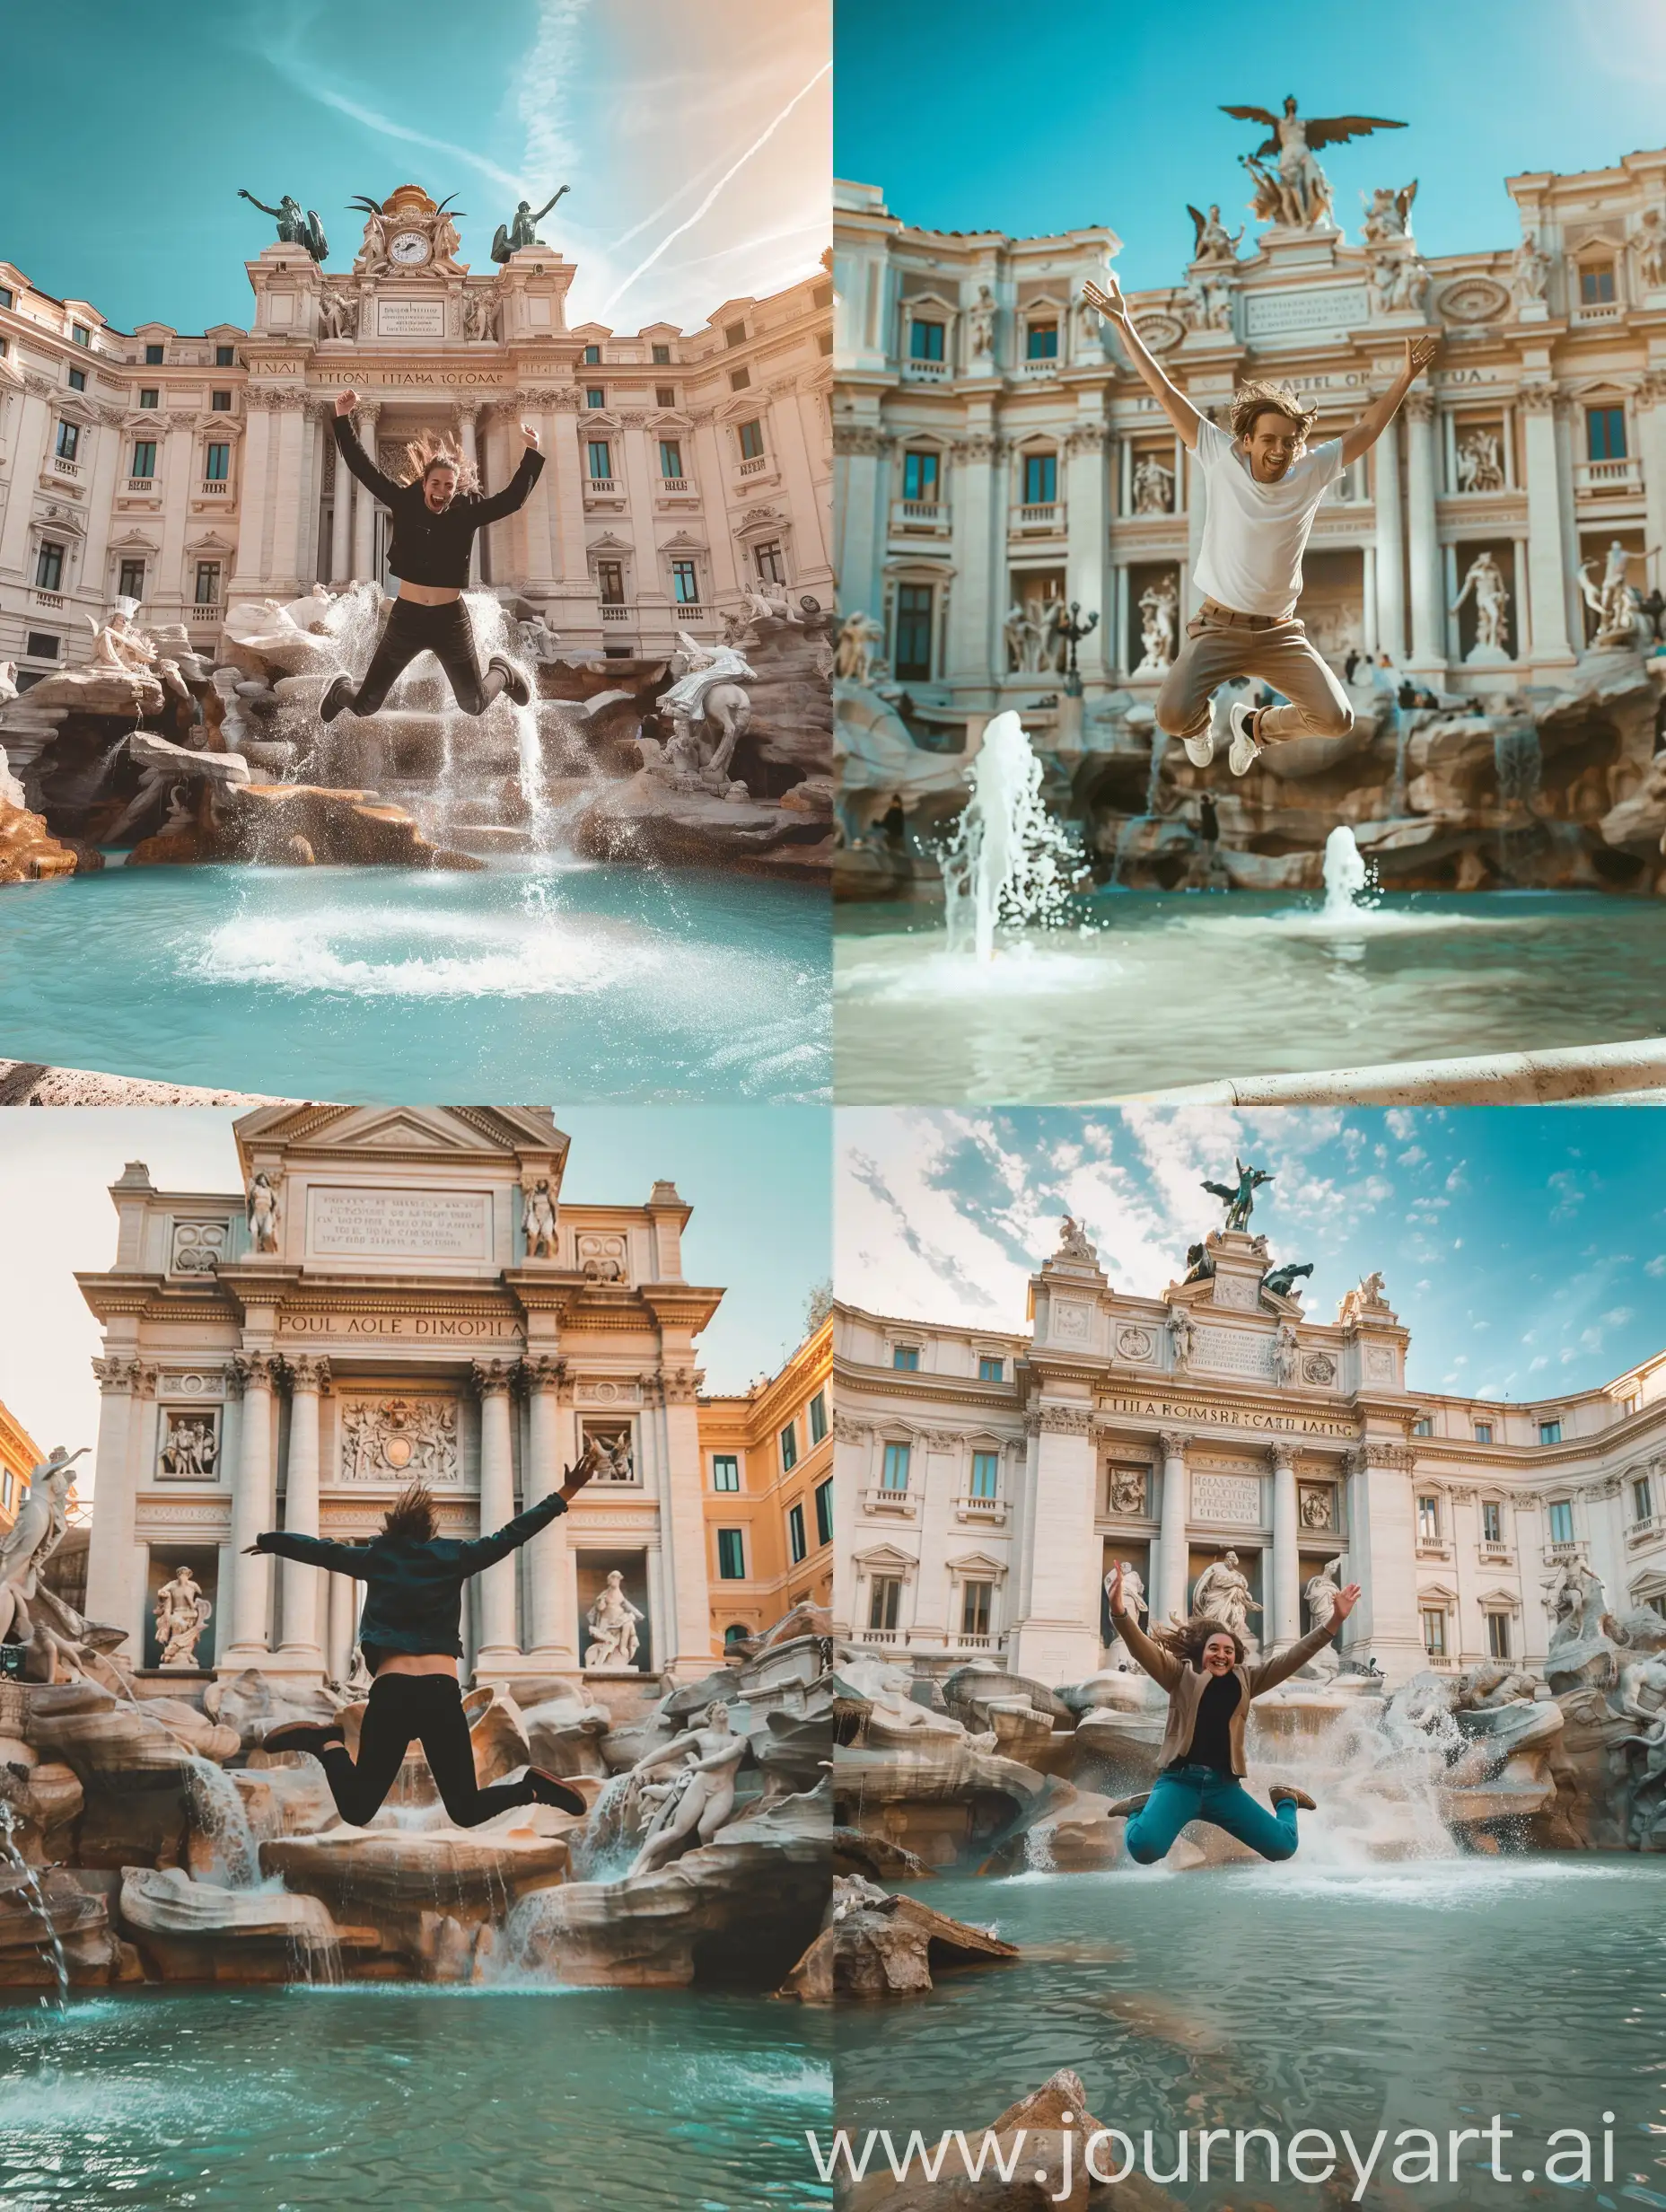 Joyful-Moment-at-Trevi-Fountain-in-Italy